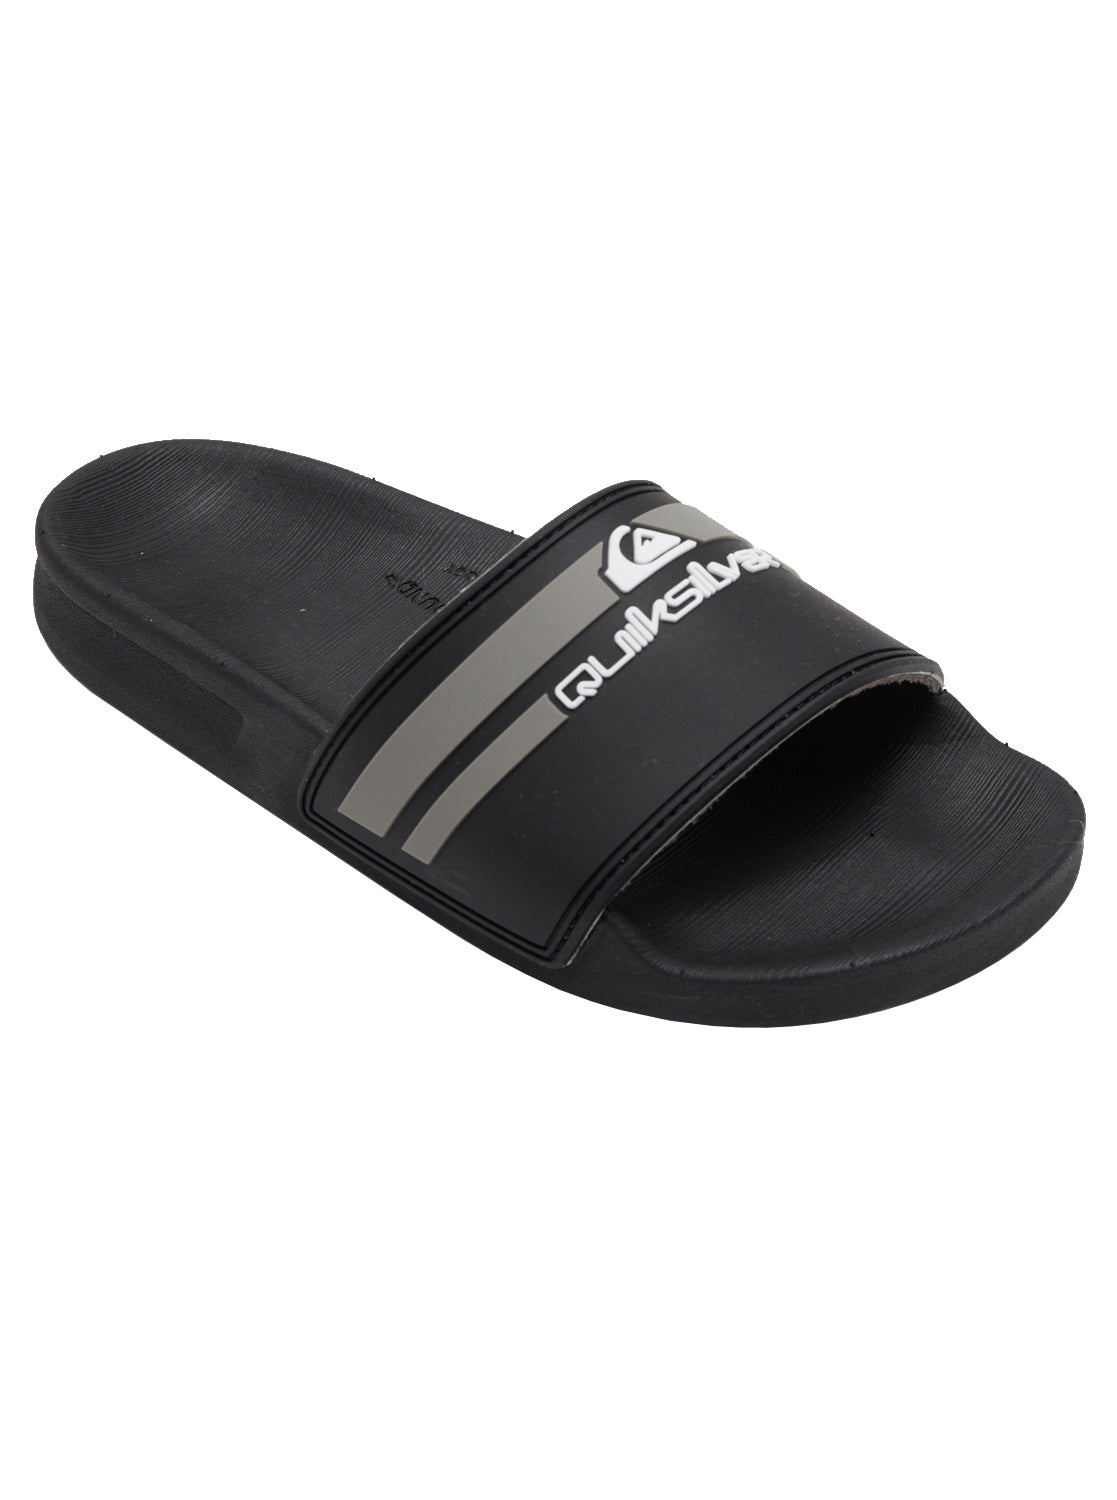 Quiksilver Rivi Slide Youth Sandal XKSK-Black-Grey-Black 13 C